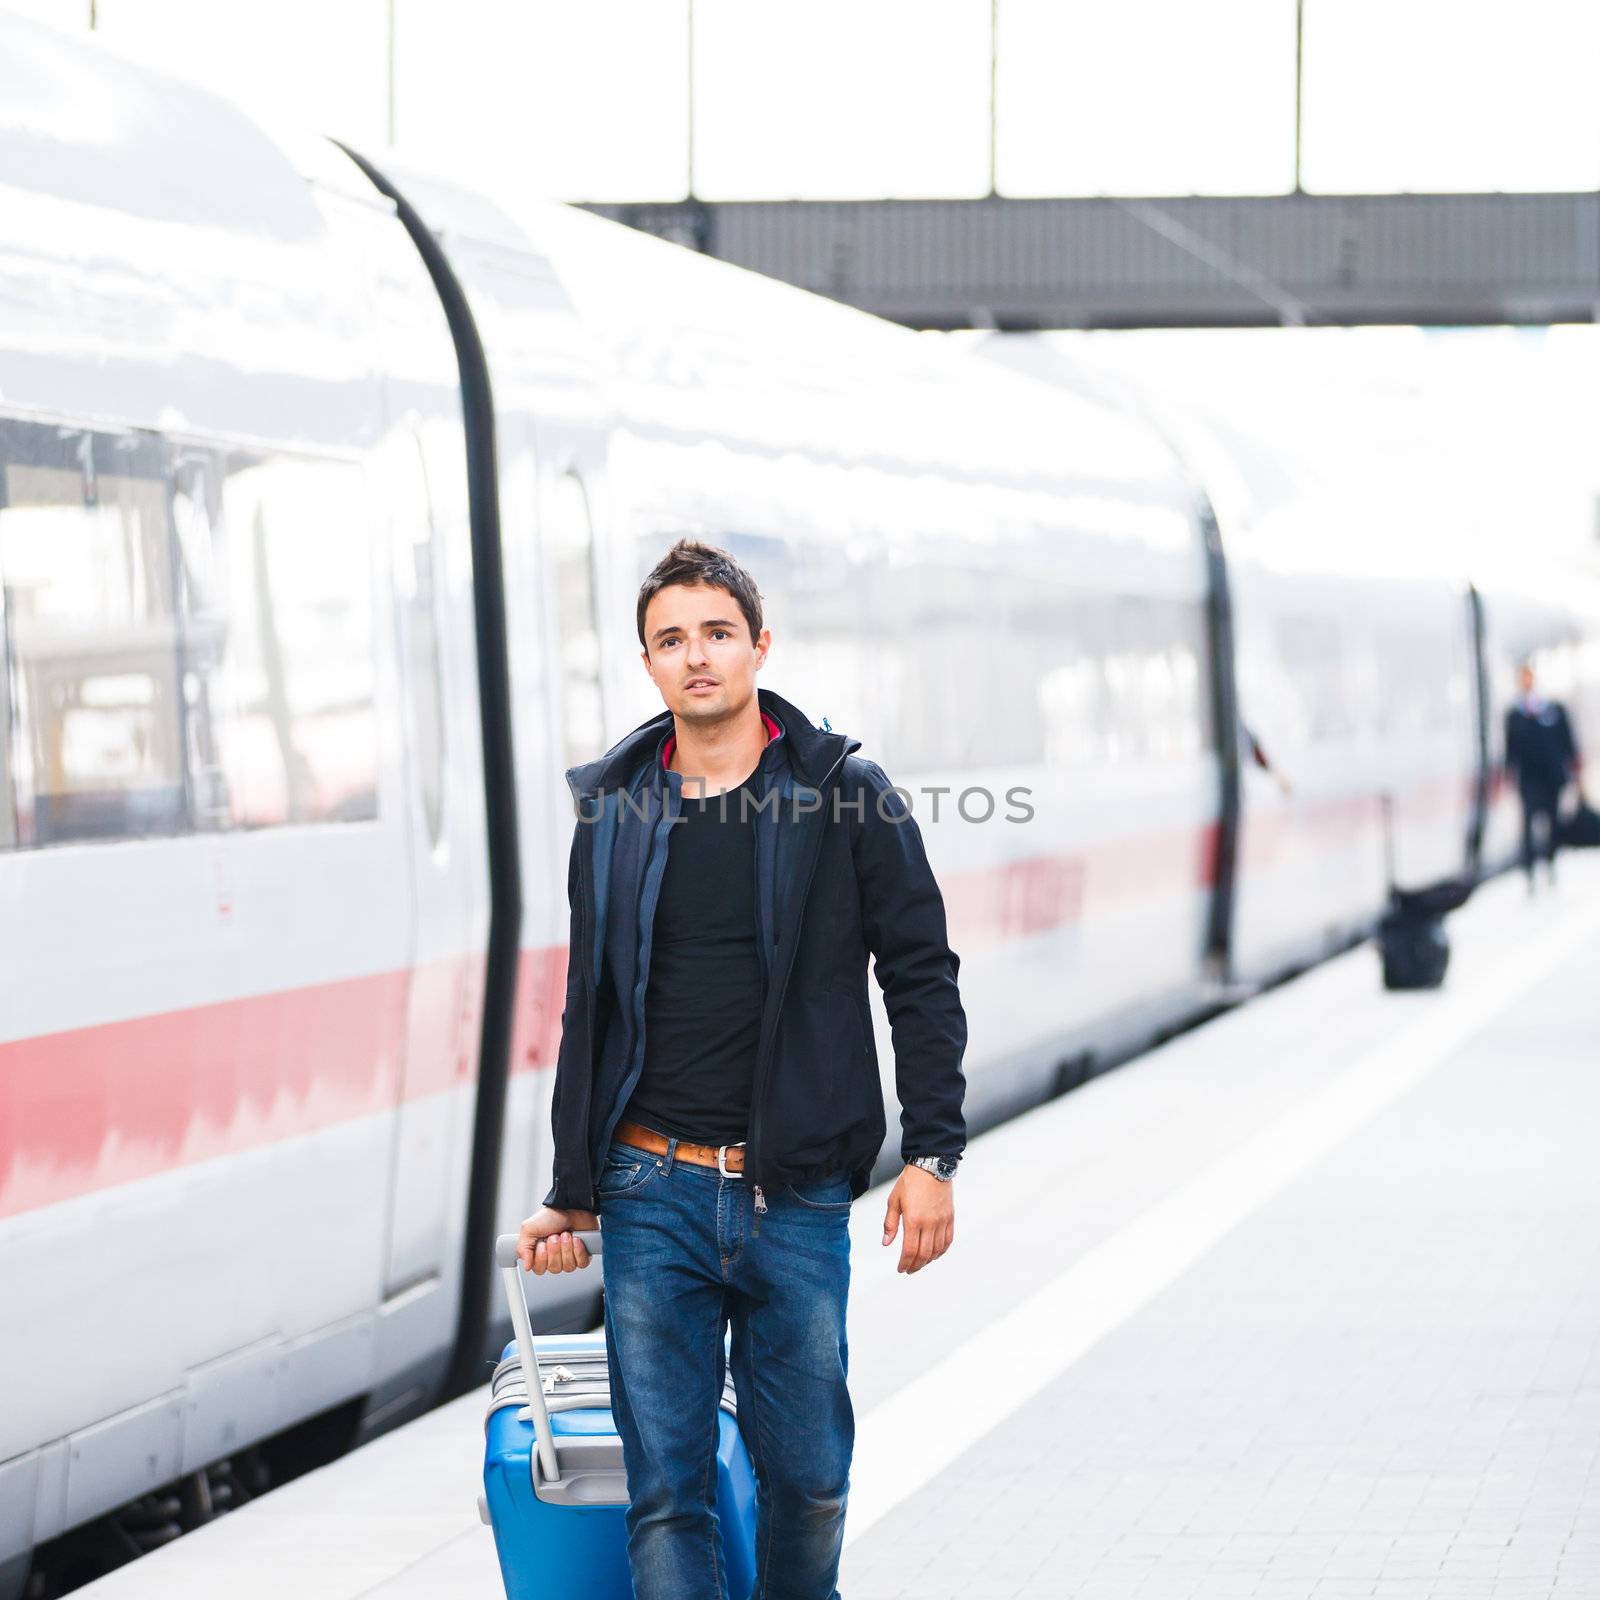 Just arrived: handsome young man walking along a platform by viktor_cap